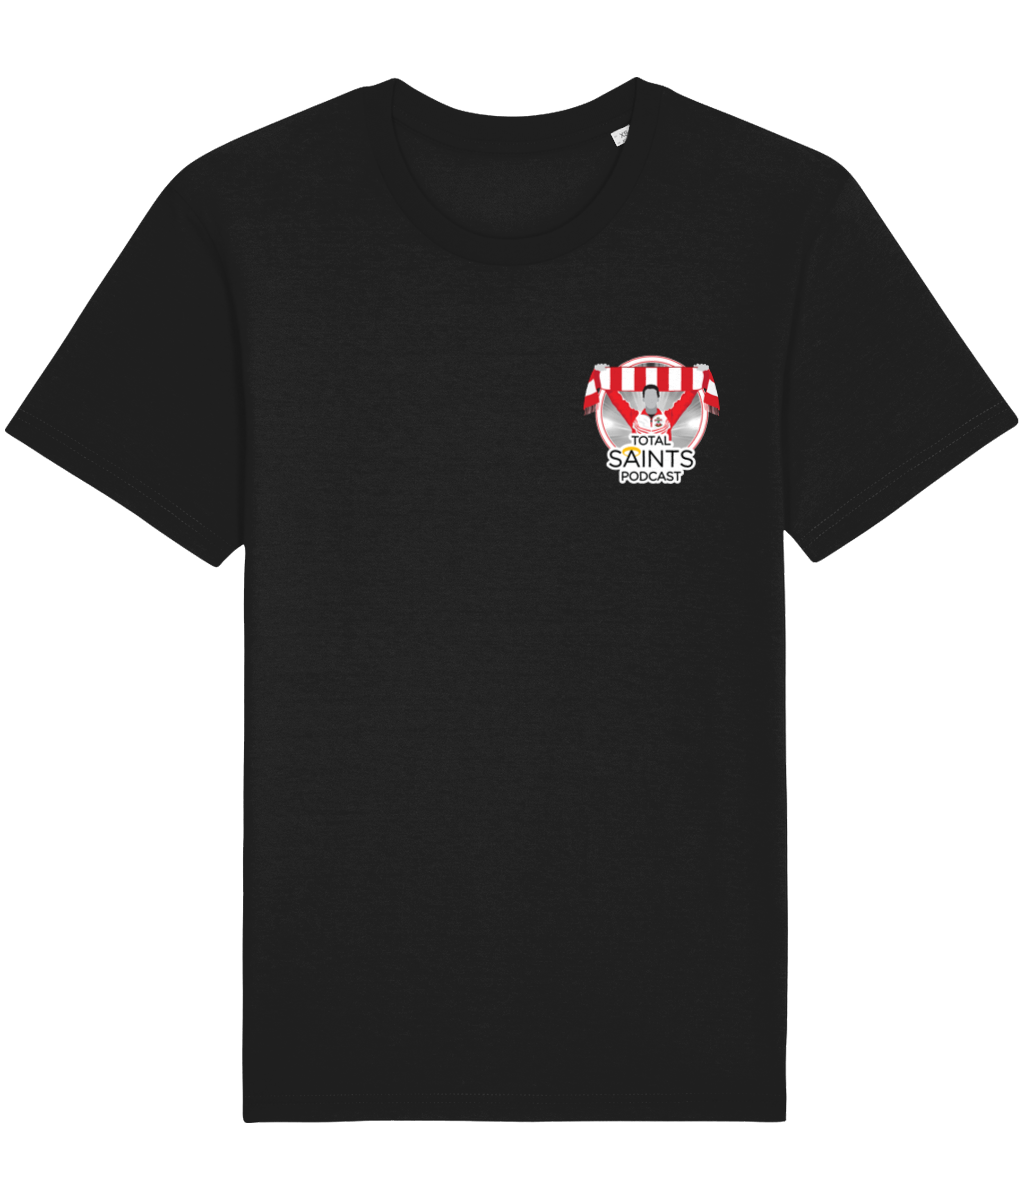 Podcast Logo T-Shirt